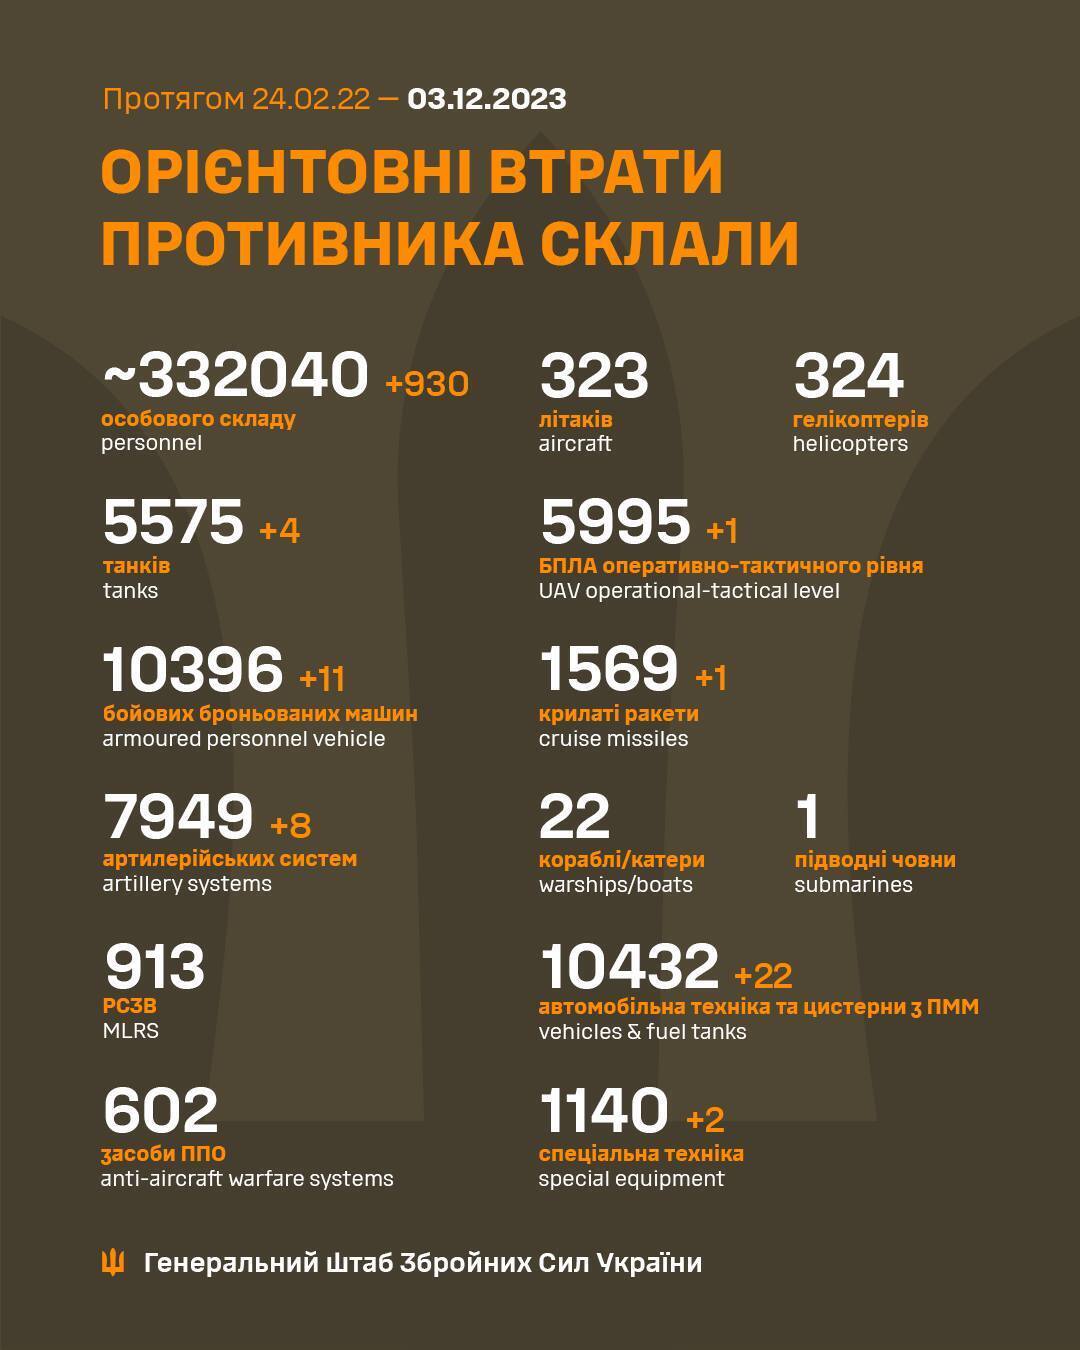 ВСУ за сутки обезвредили 930 оккупантов и восемь артсистем врага